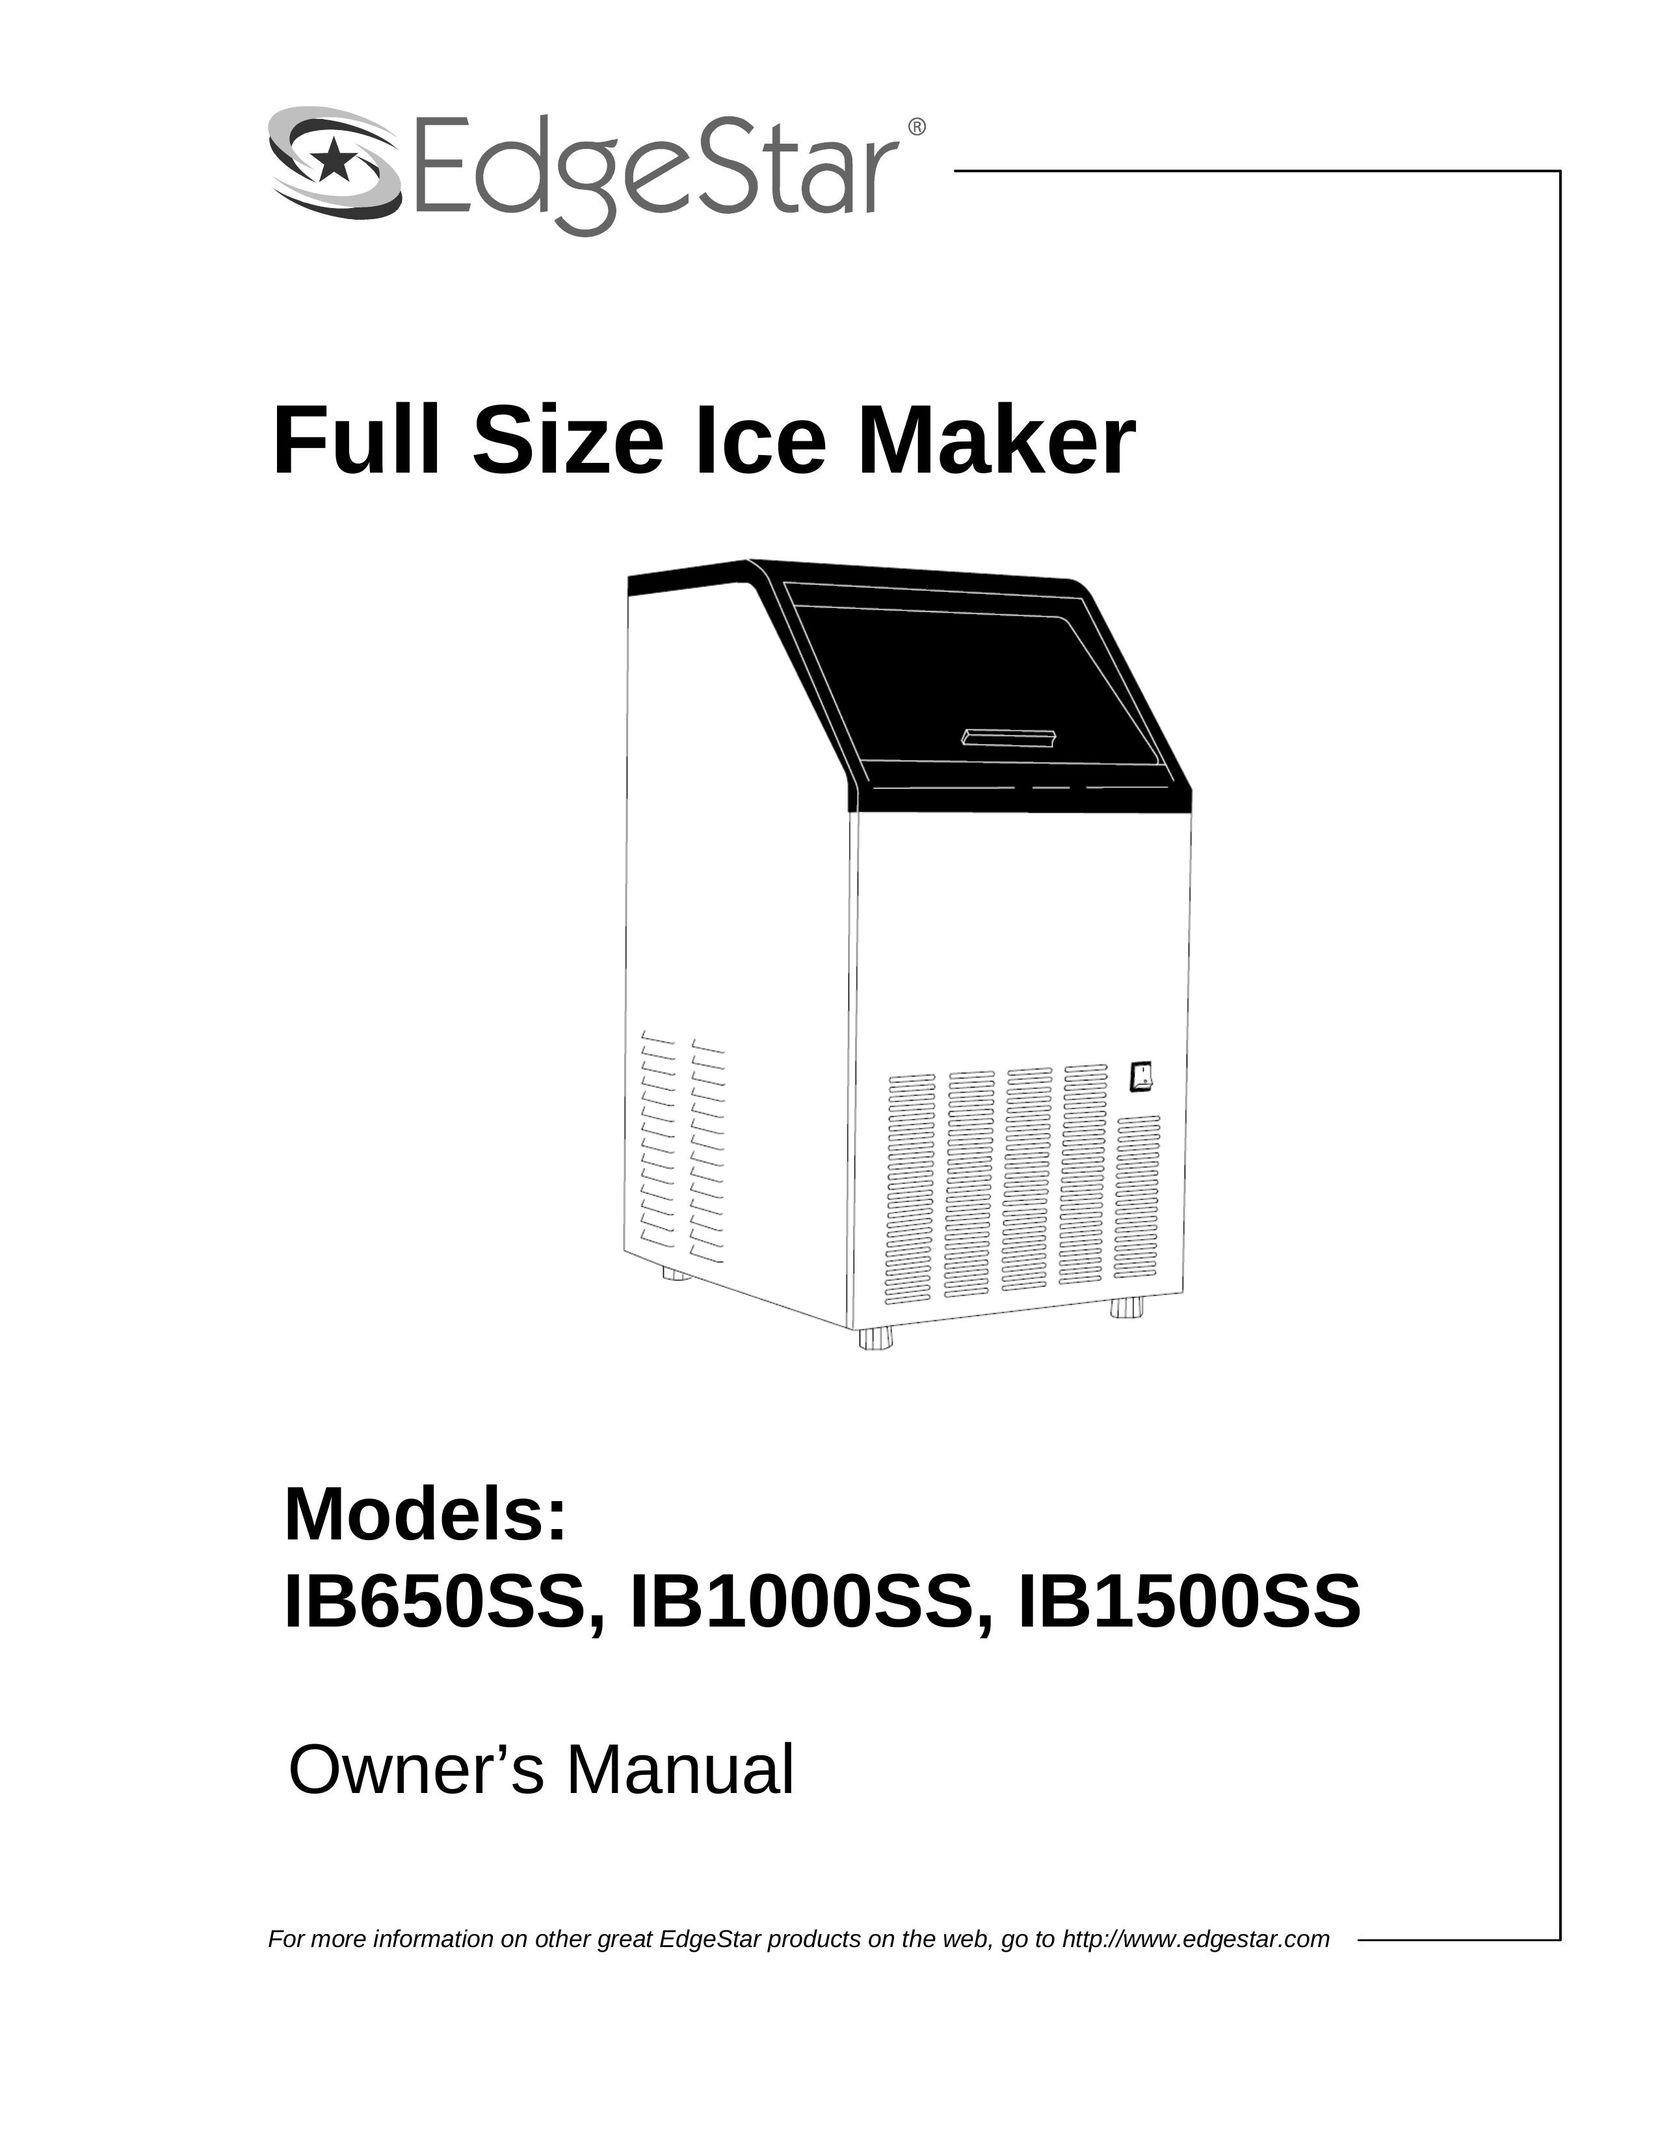 EdgeStar IB650SS Ice Maker User Manual